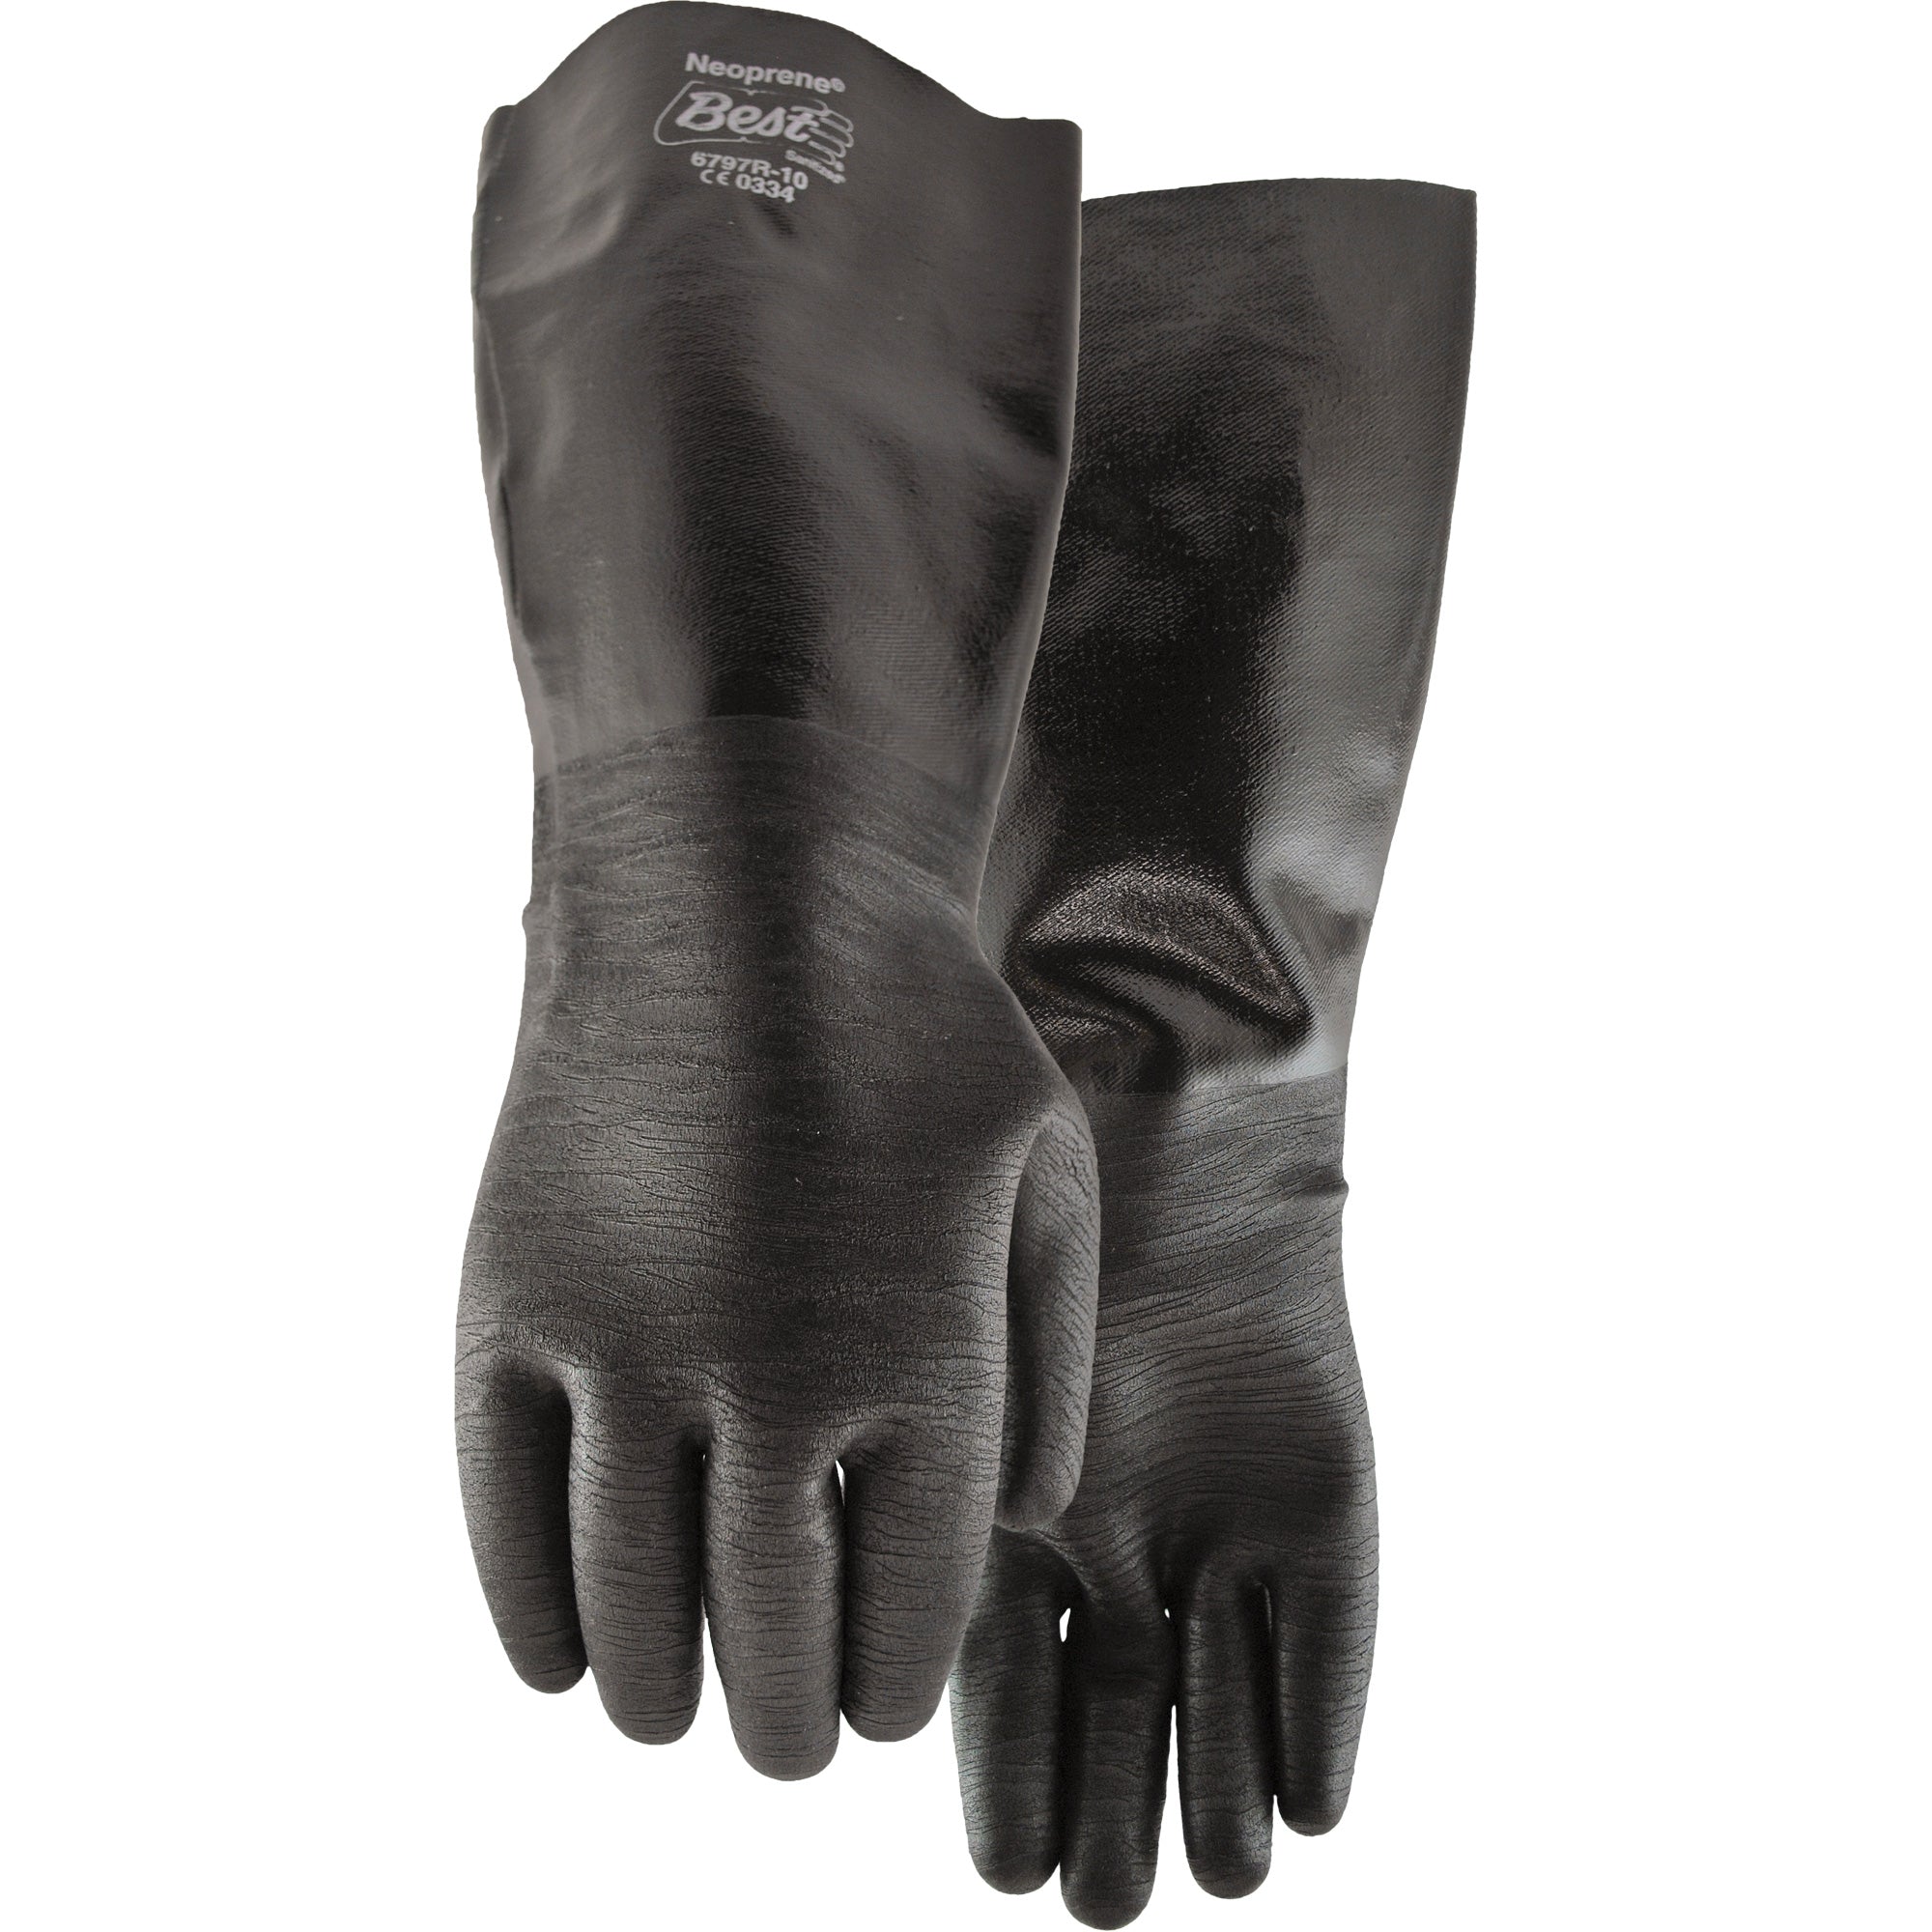 Gloves, Neoprene, Size Large/10, 18 L, Cotton Inner Lining, 84-mil,  Chemical Resistant Gloves